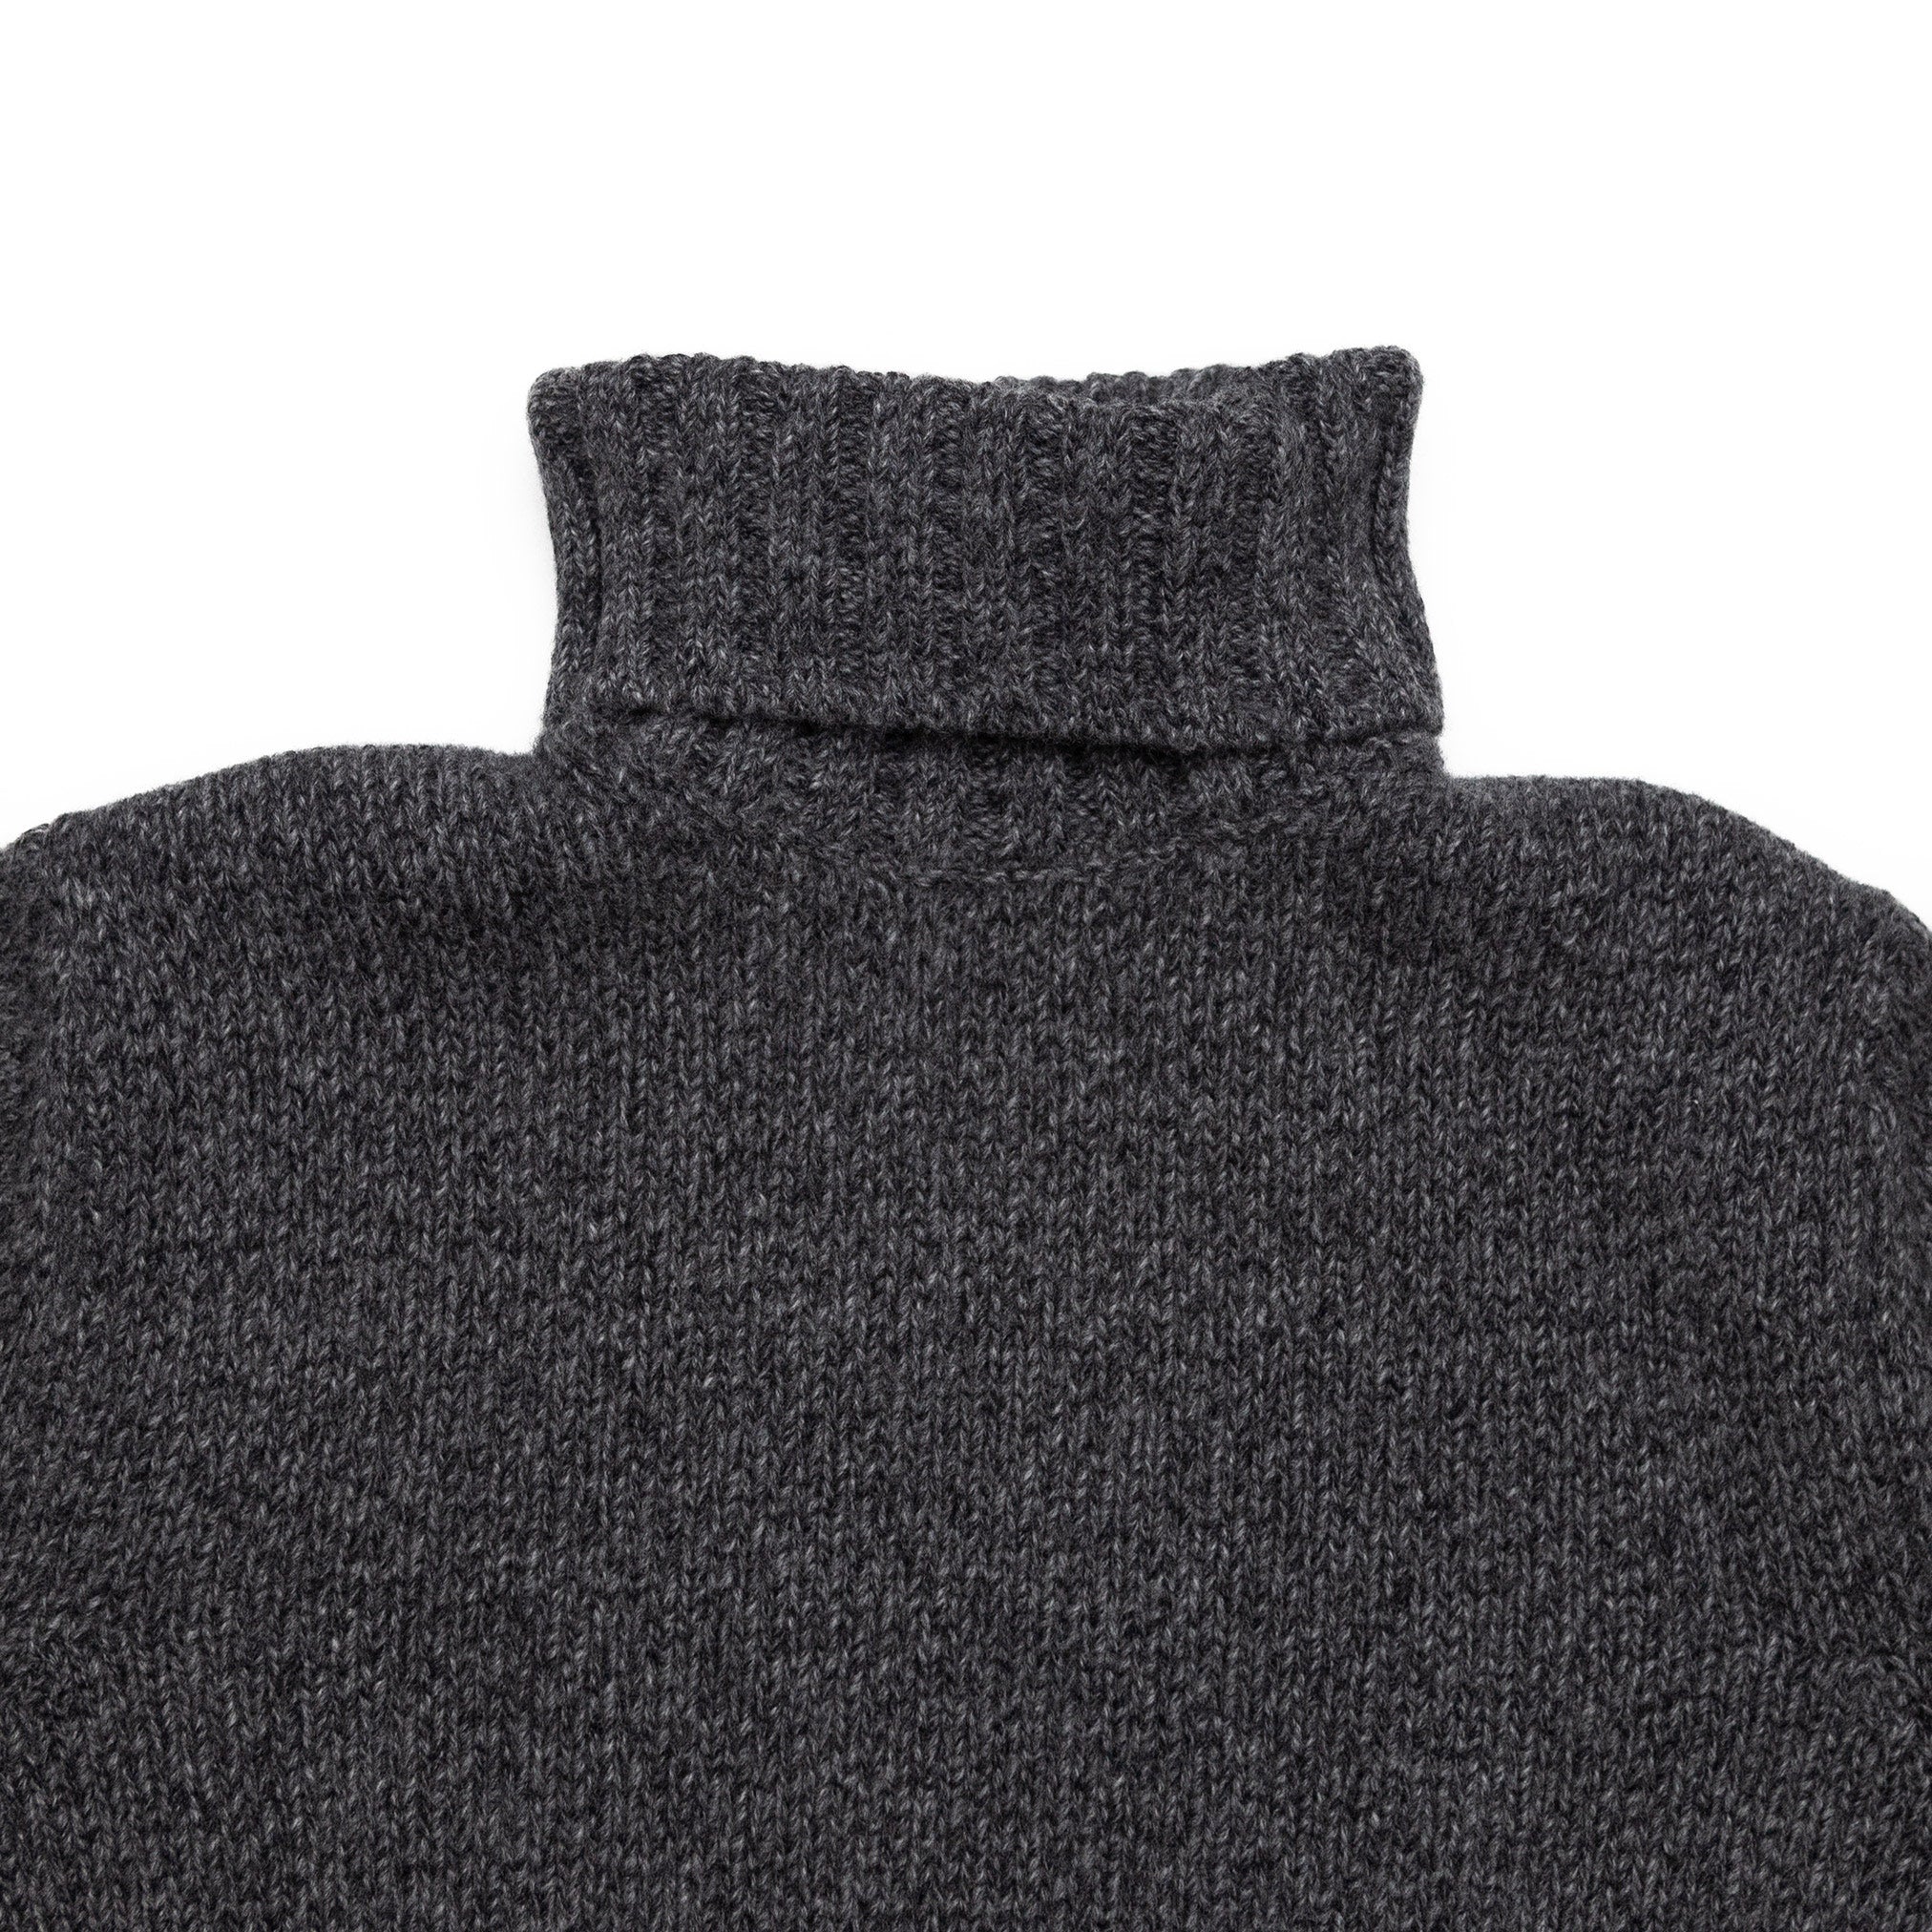 Rollneck Sweater in Charcoal Melange